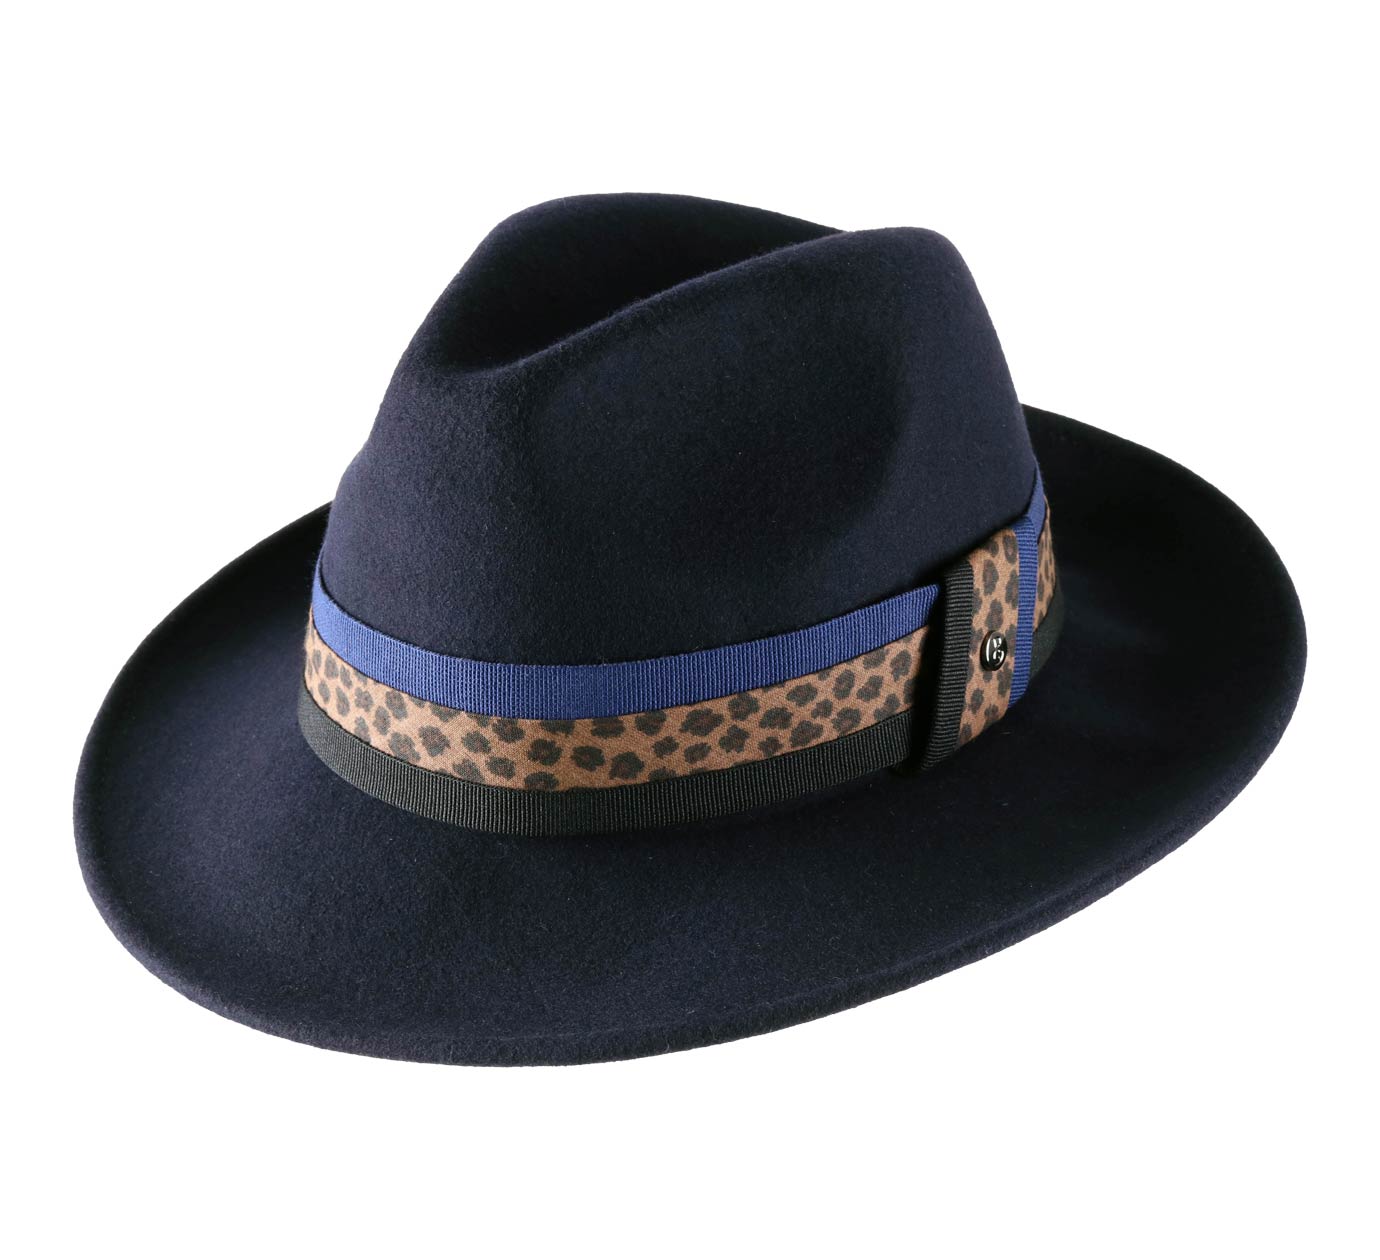 Chapeau motifs léopard